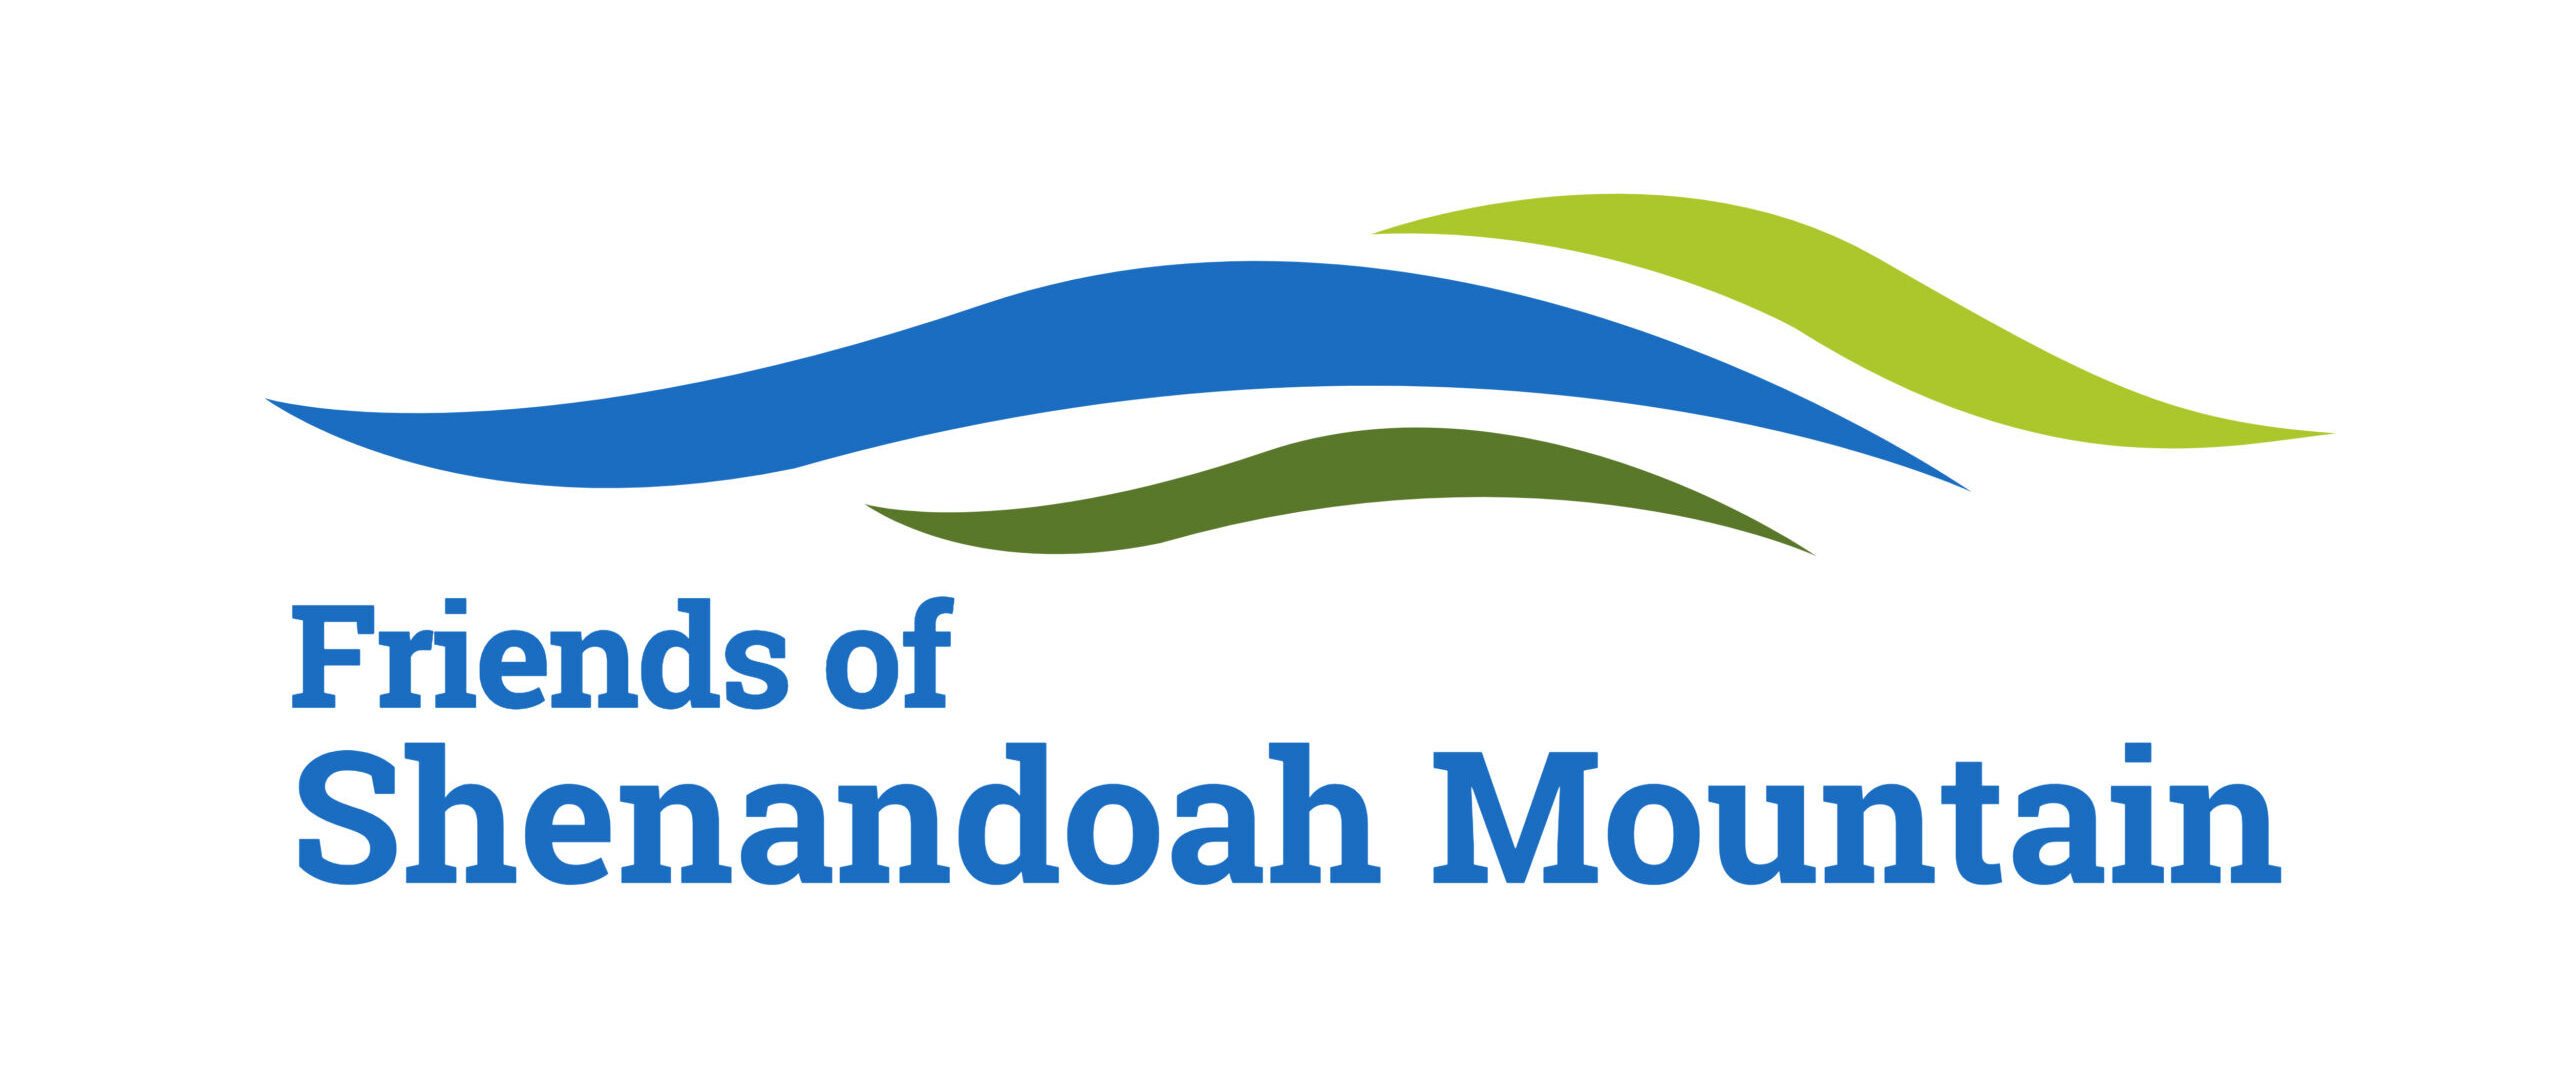 Friends of Shenandoah Mountain logo.